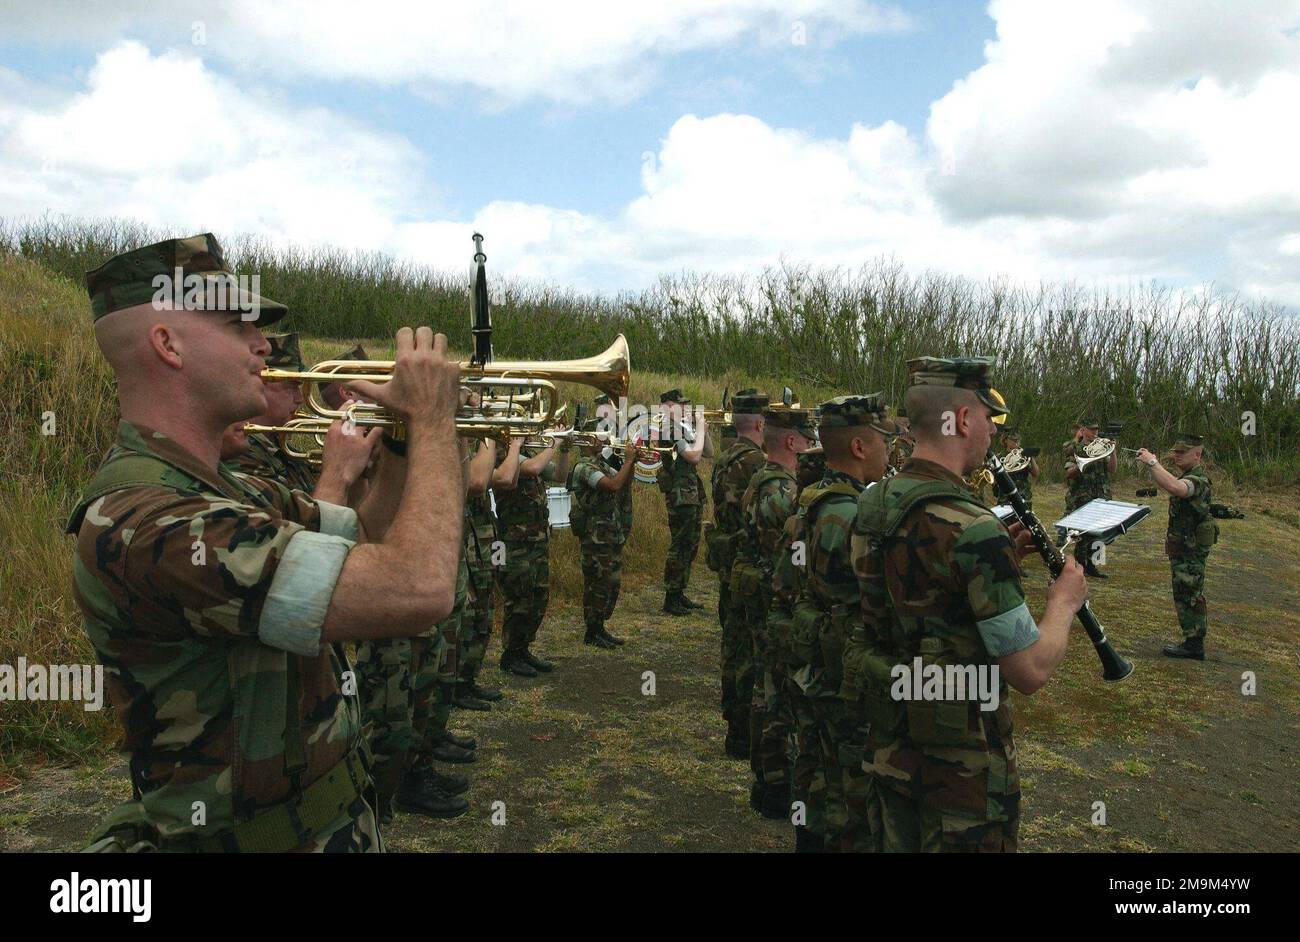 030312-M-8337G-007. Base: Iwo Jima Country: Japan (JPN) Scene Major Command Shown: III MEF Band Stock Photo